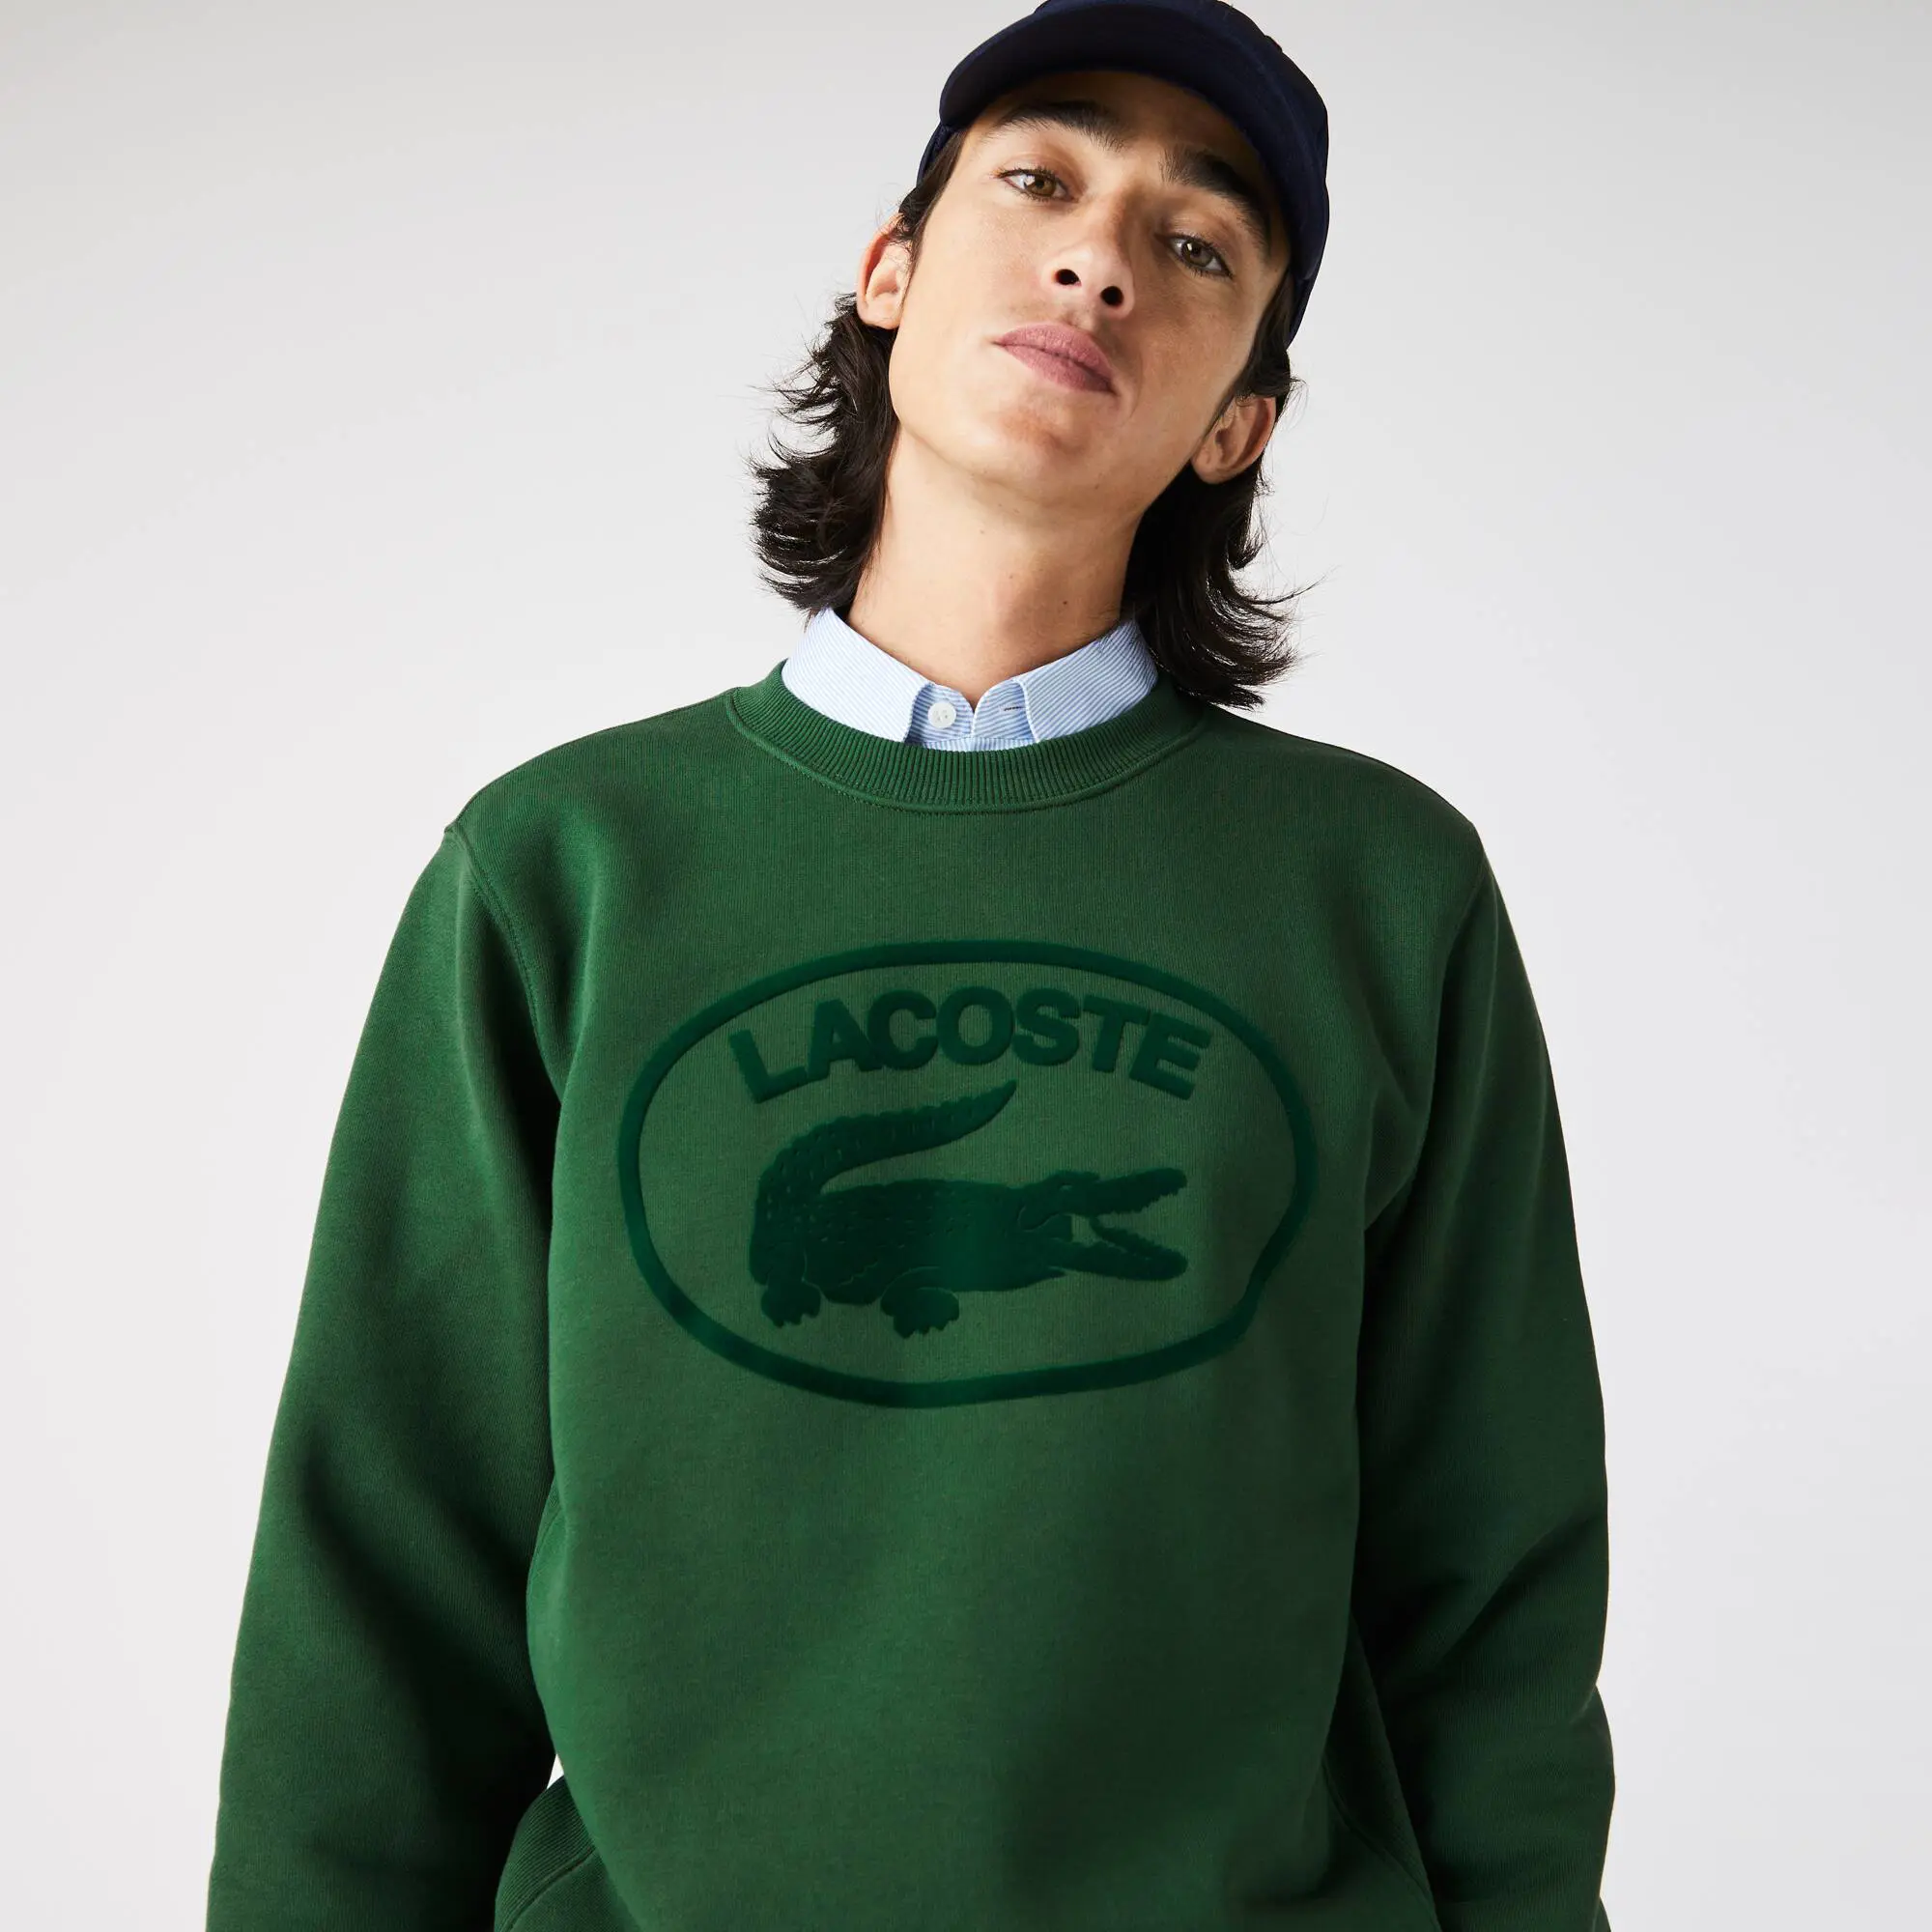 Lacoste Men's Relaxed Fit Organic Cotton Sweatshirt. 1